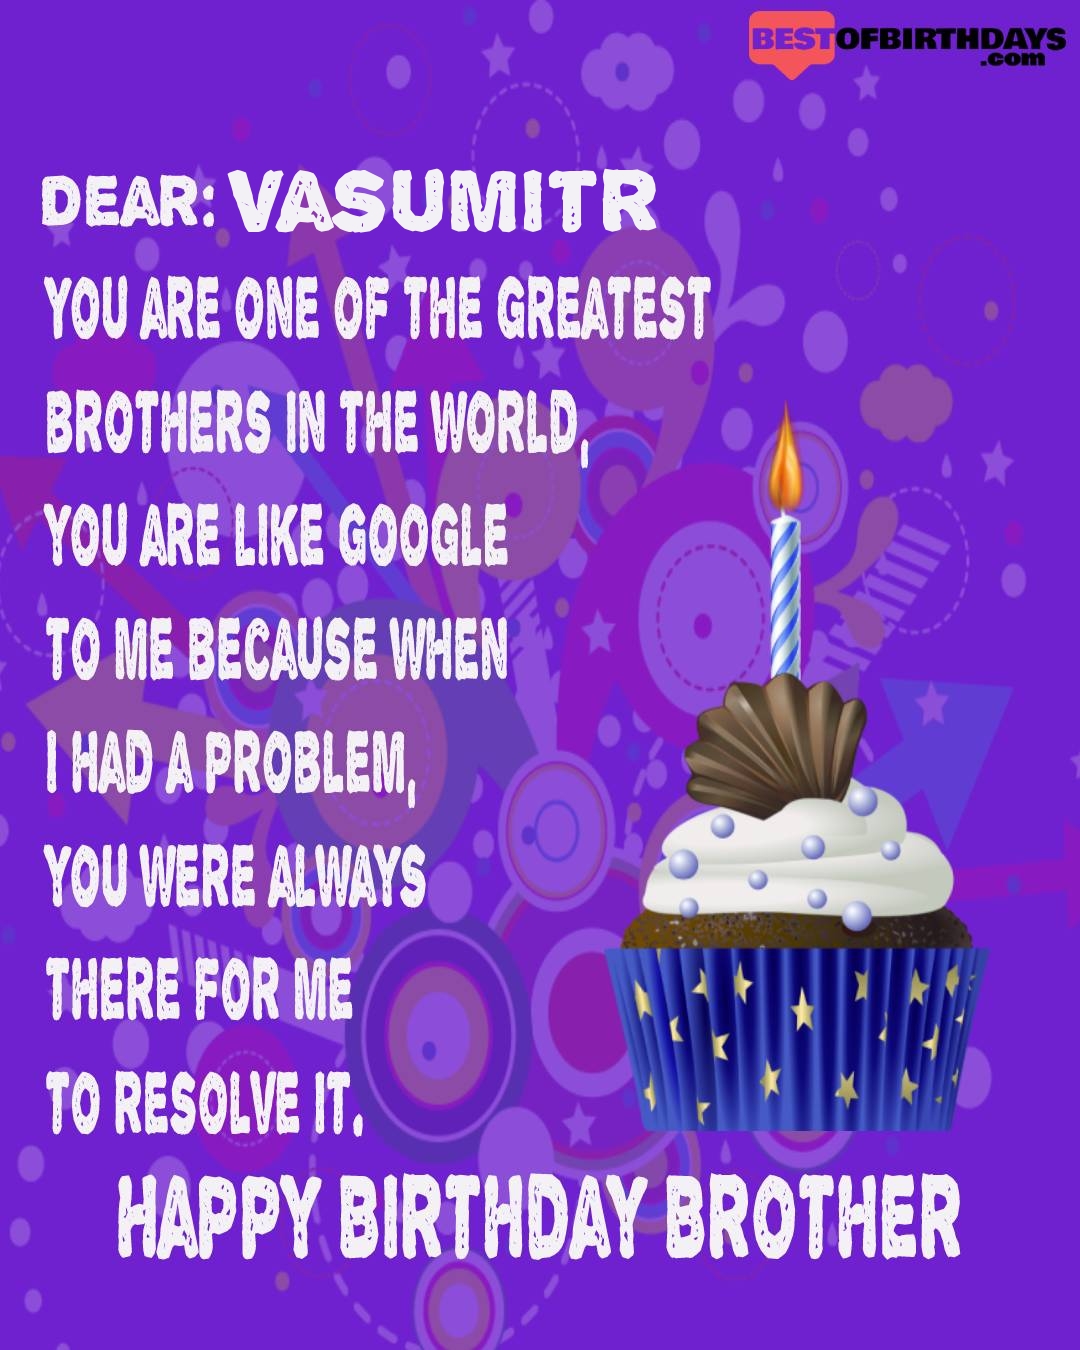 Happy birthday vasumitr bhai brother bro